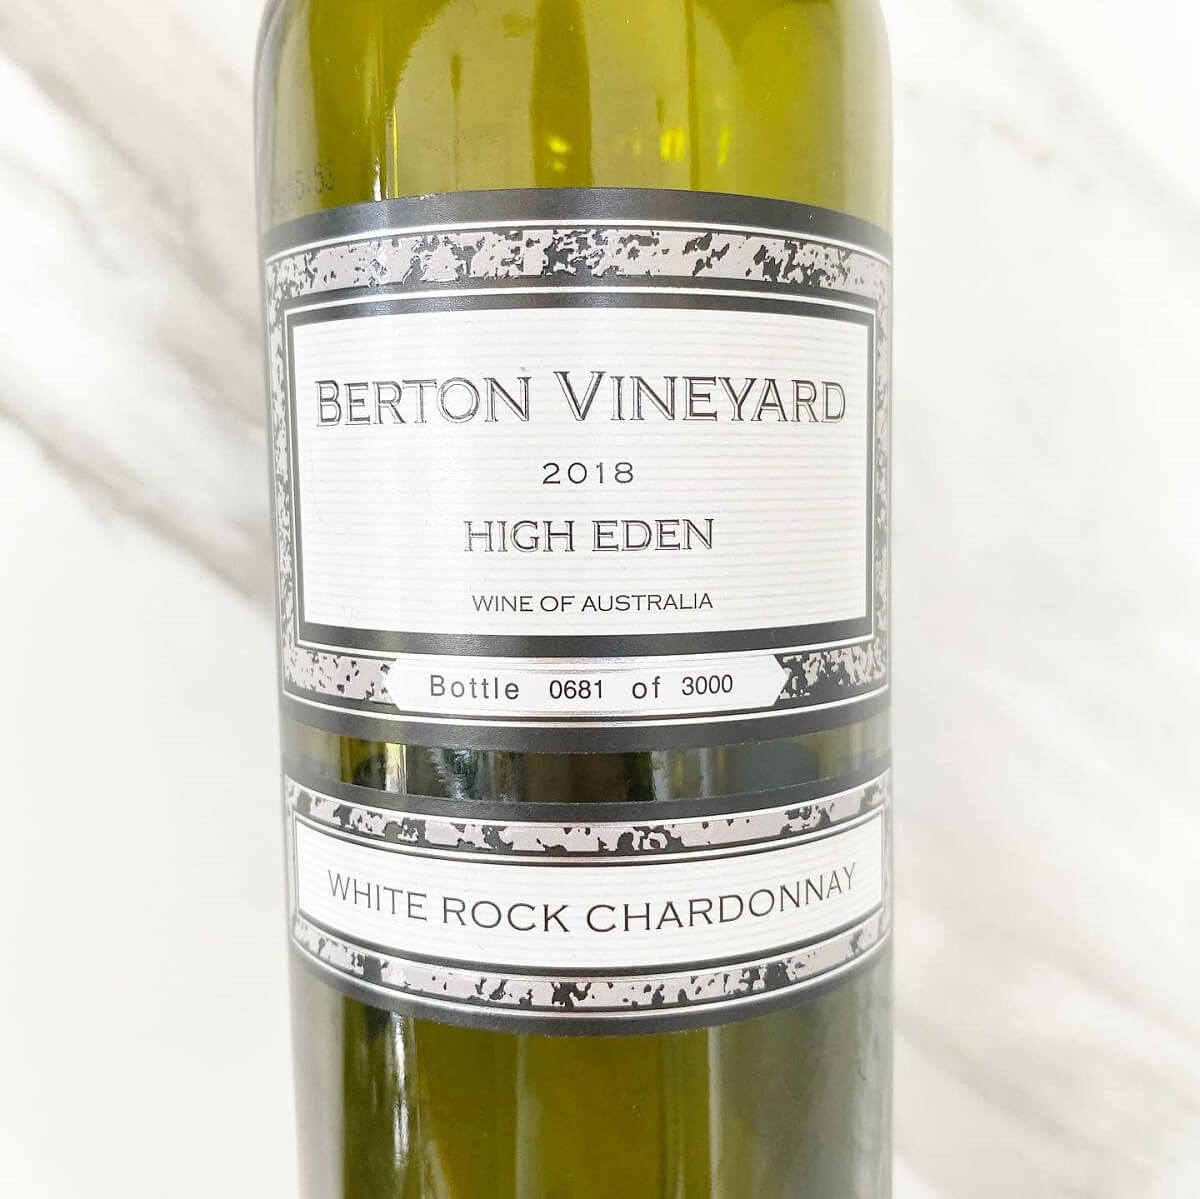 Berton Vineyard 2018 High Eden ‘White Rock’ Chardonnay